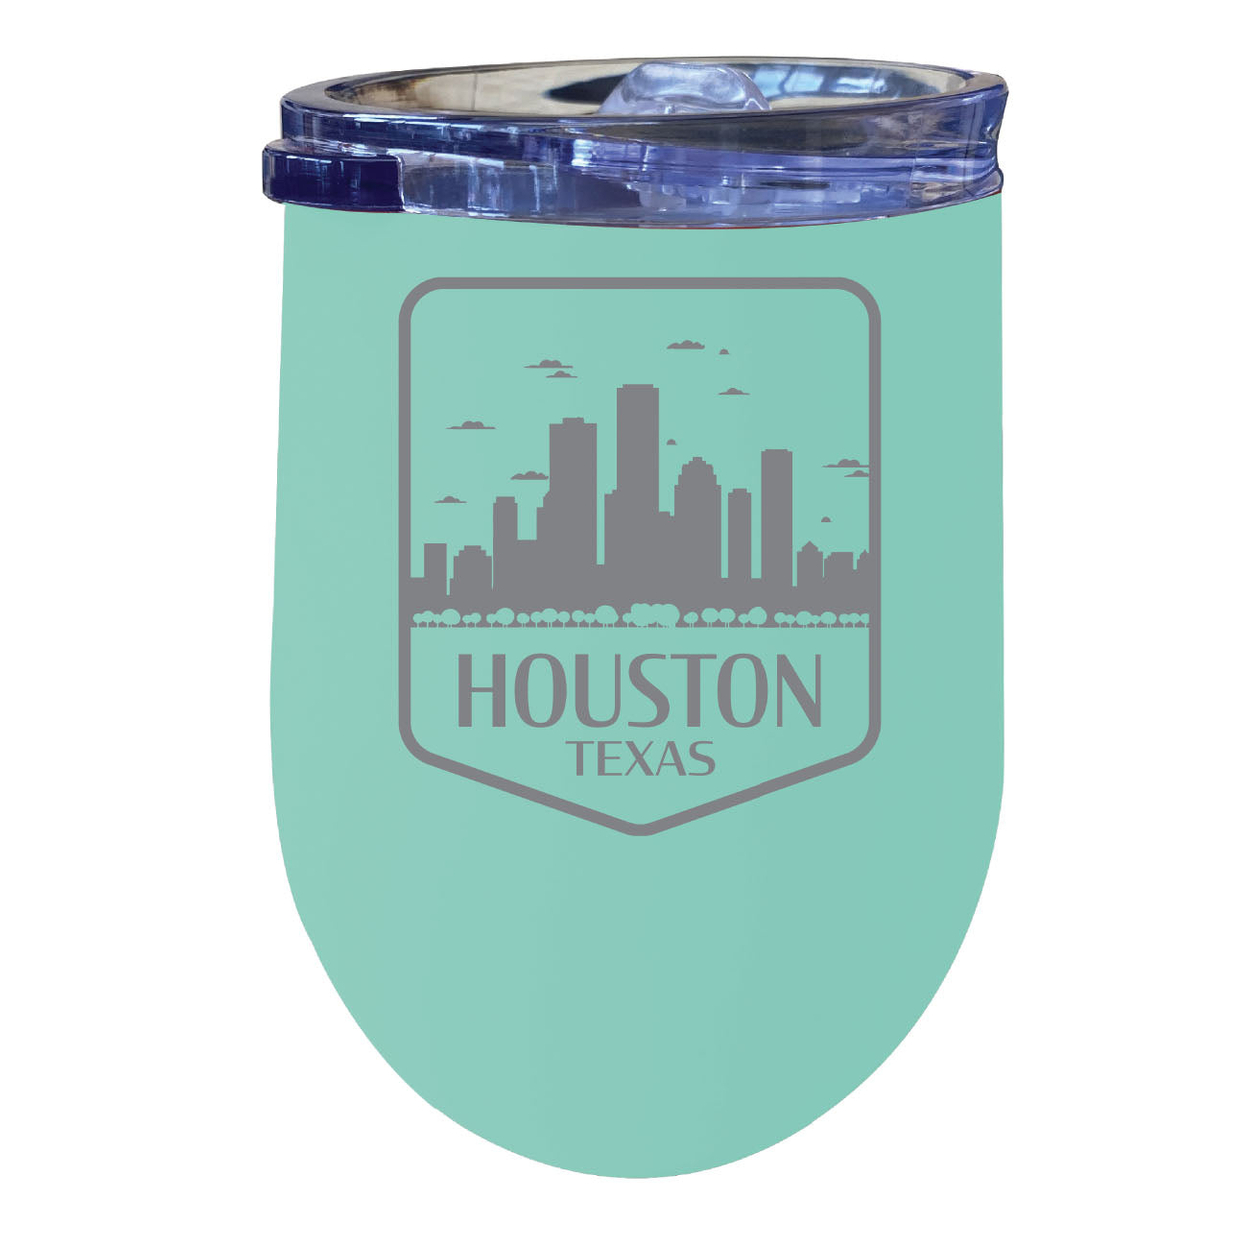 Houston Texas Souvenir 12 Oz Engraved Insulated Wine Stainless Steel Tumbler - Rainbow Glitter Gray,,Single Unit